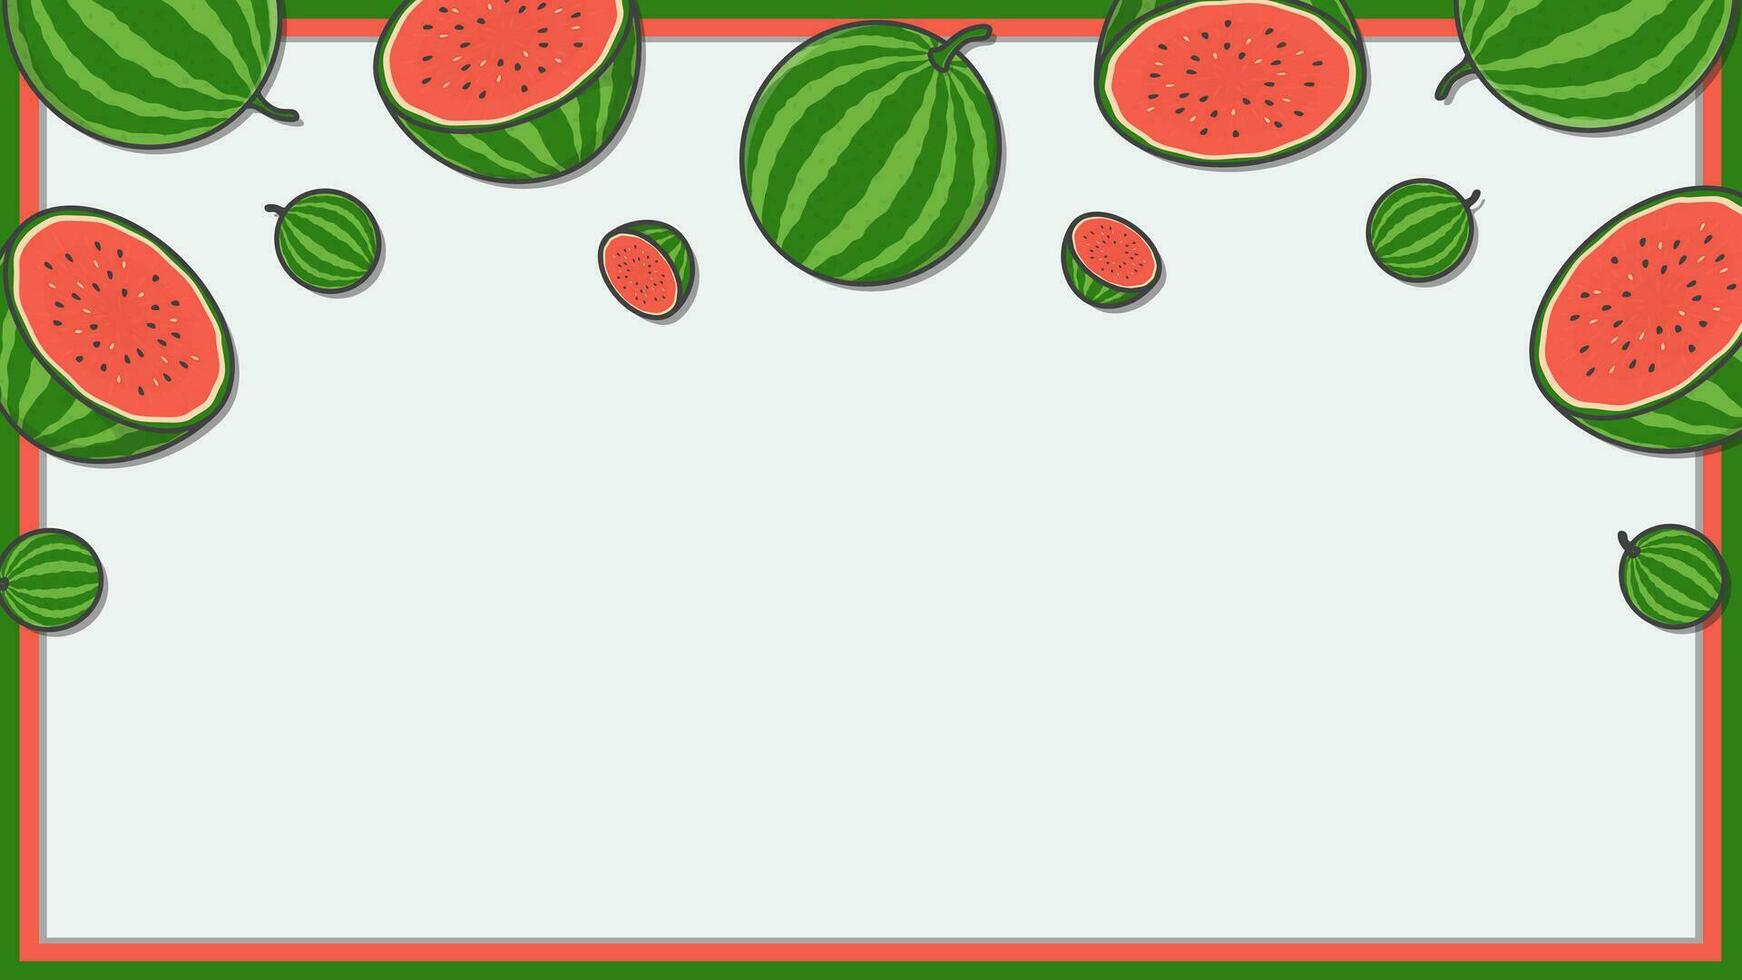 Watermelon Fruit Background Design Template. Watermelon Fruit Cartoon Vector Illustration. Watermelon Fruit